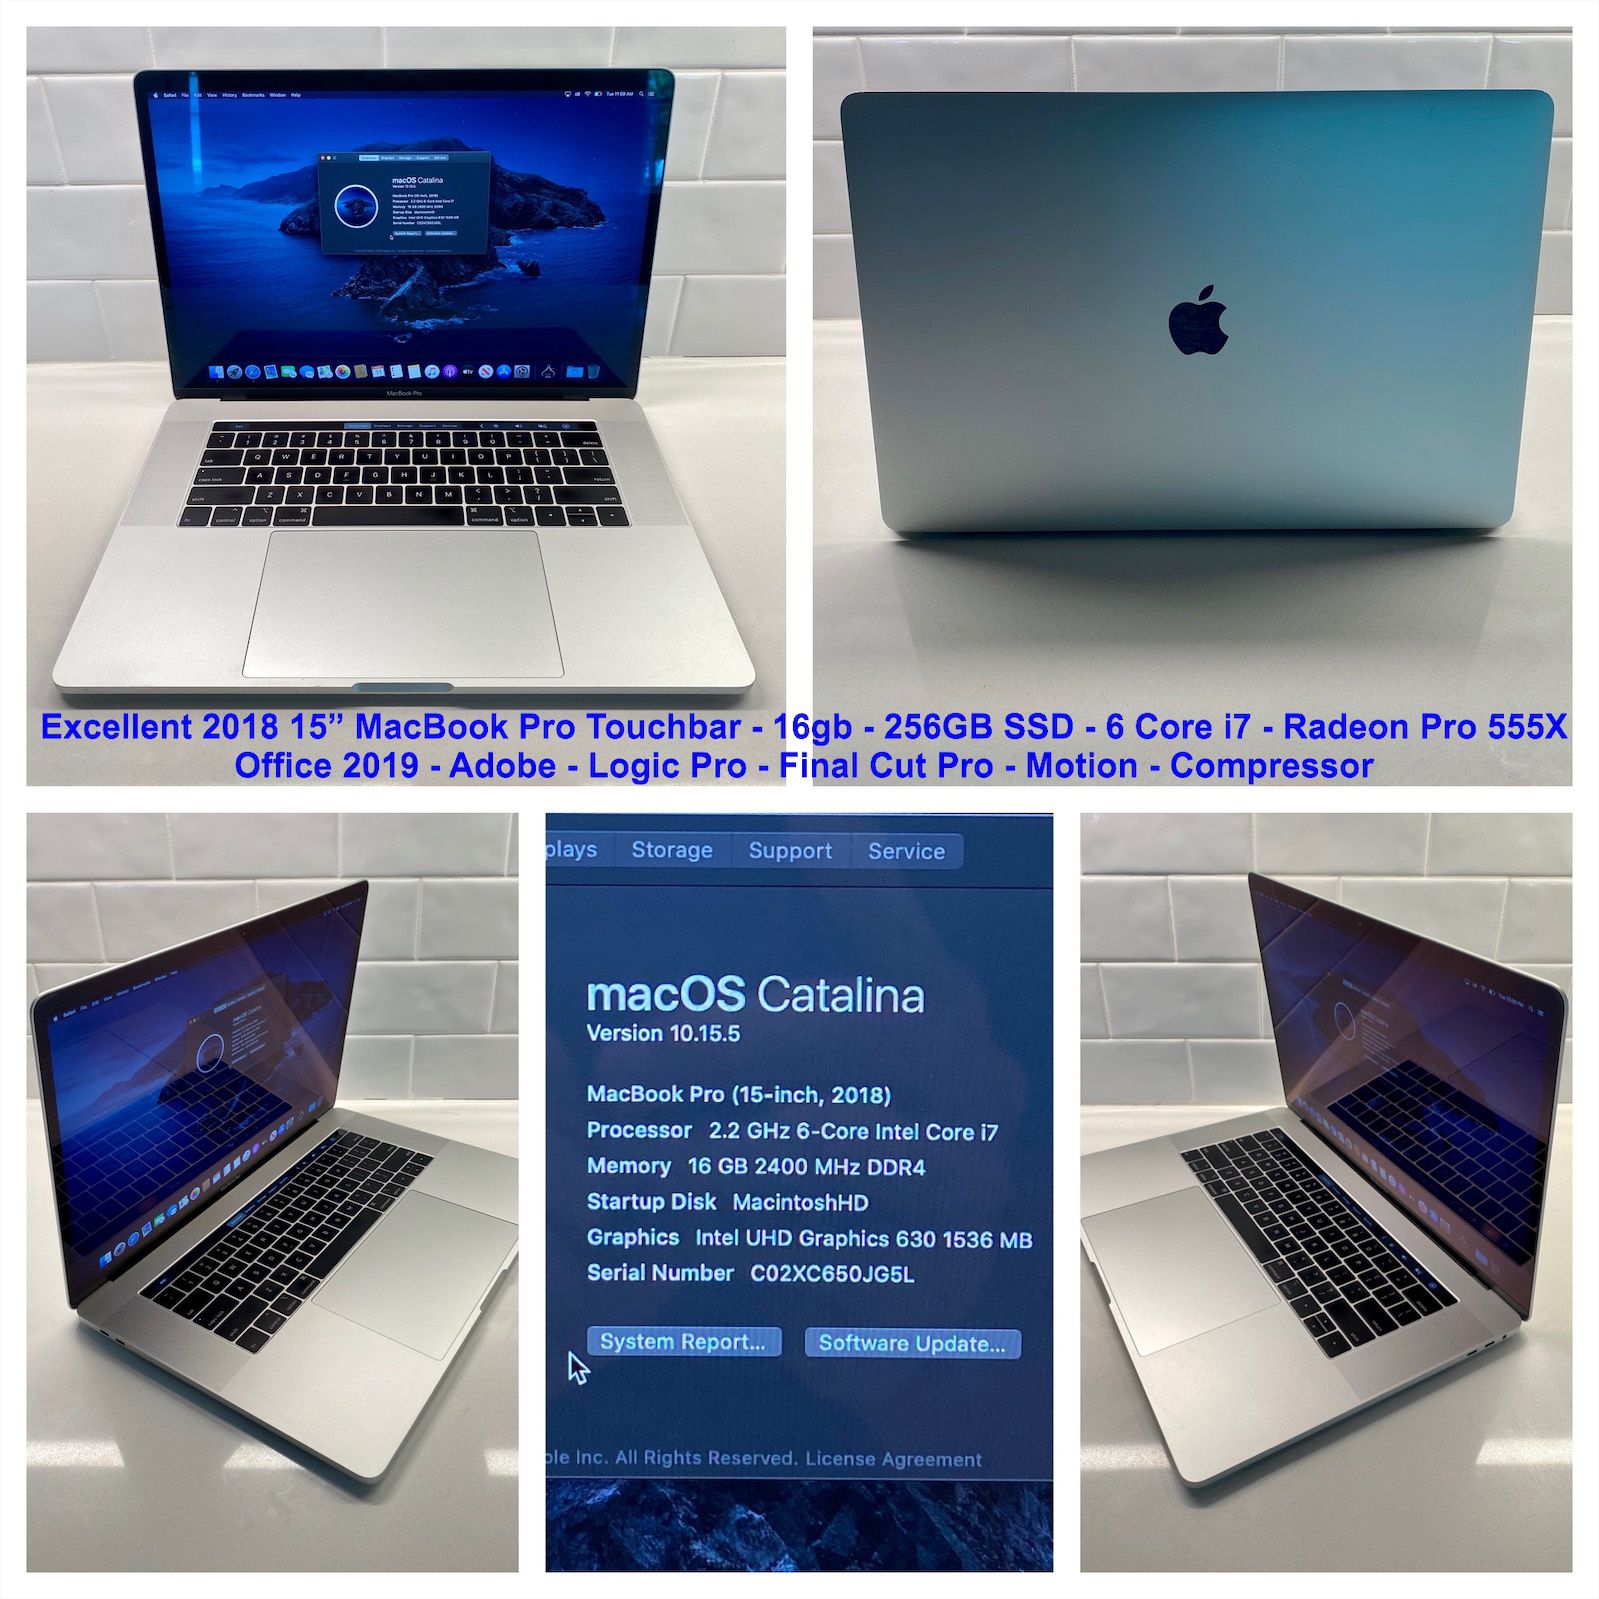 Excellent 2018 Apple 15” MacBook Pro Touchbar, 16gb, 256gb, Office 2019, Logic, FCP